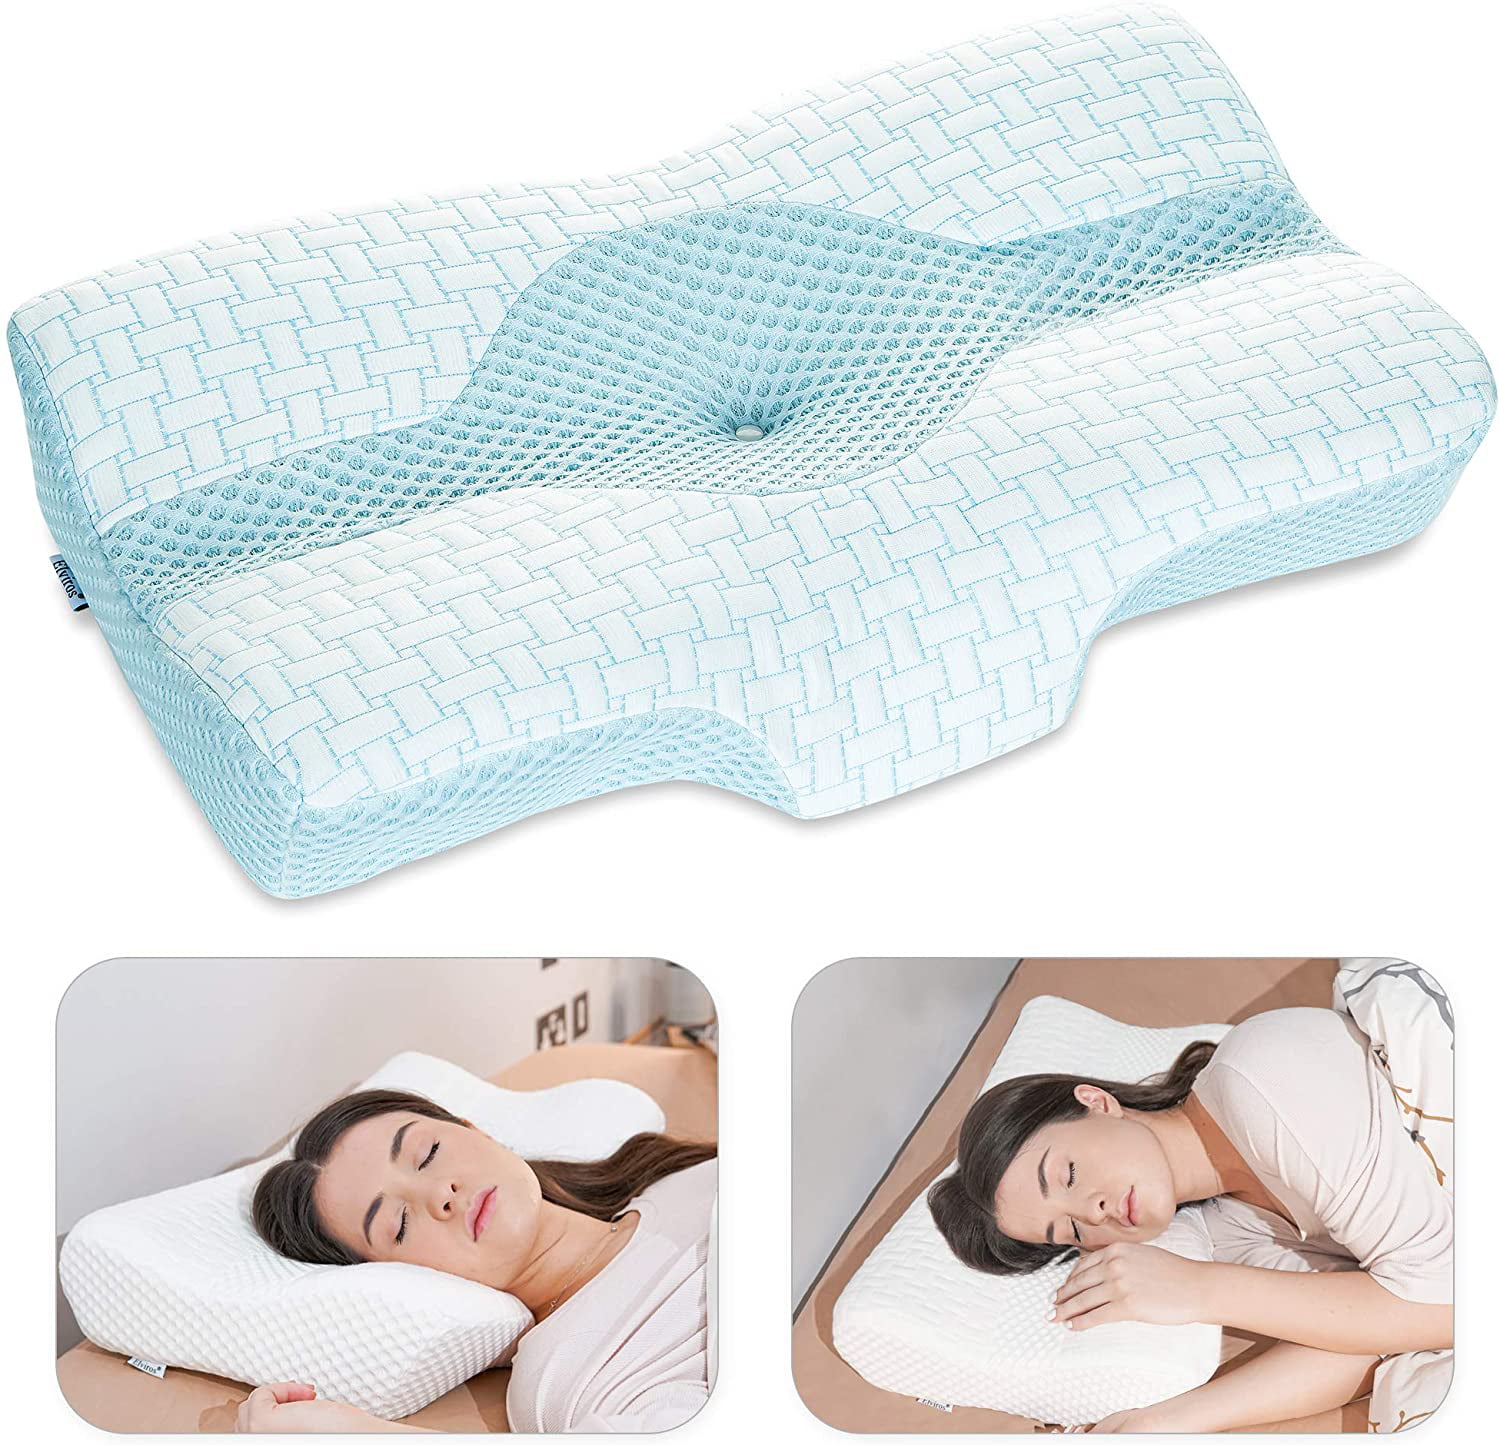 Ergonomic Orthopedic Cervical Memory Foam Contour Support Pain Relief Pillow 